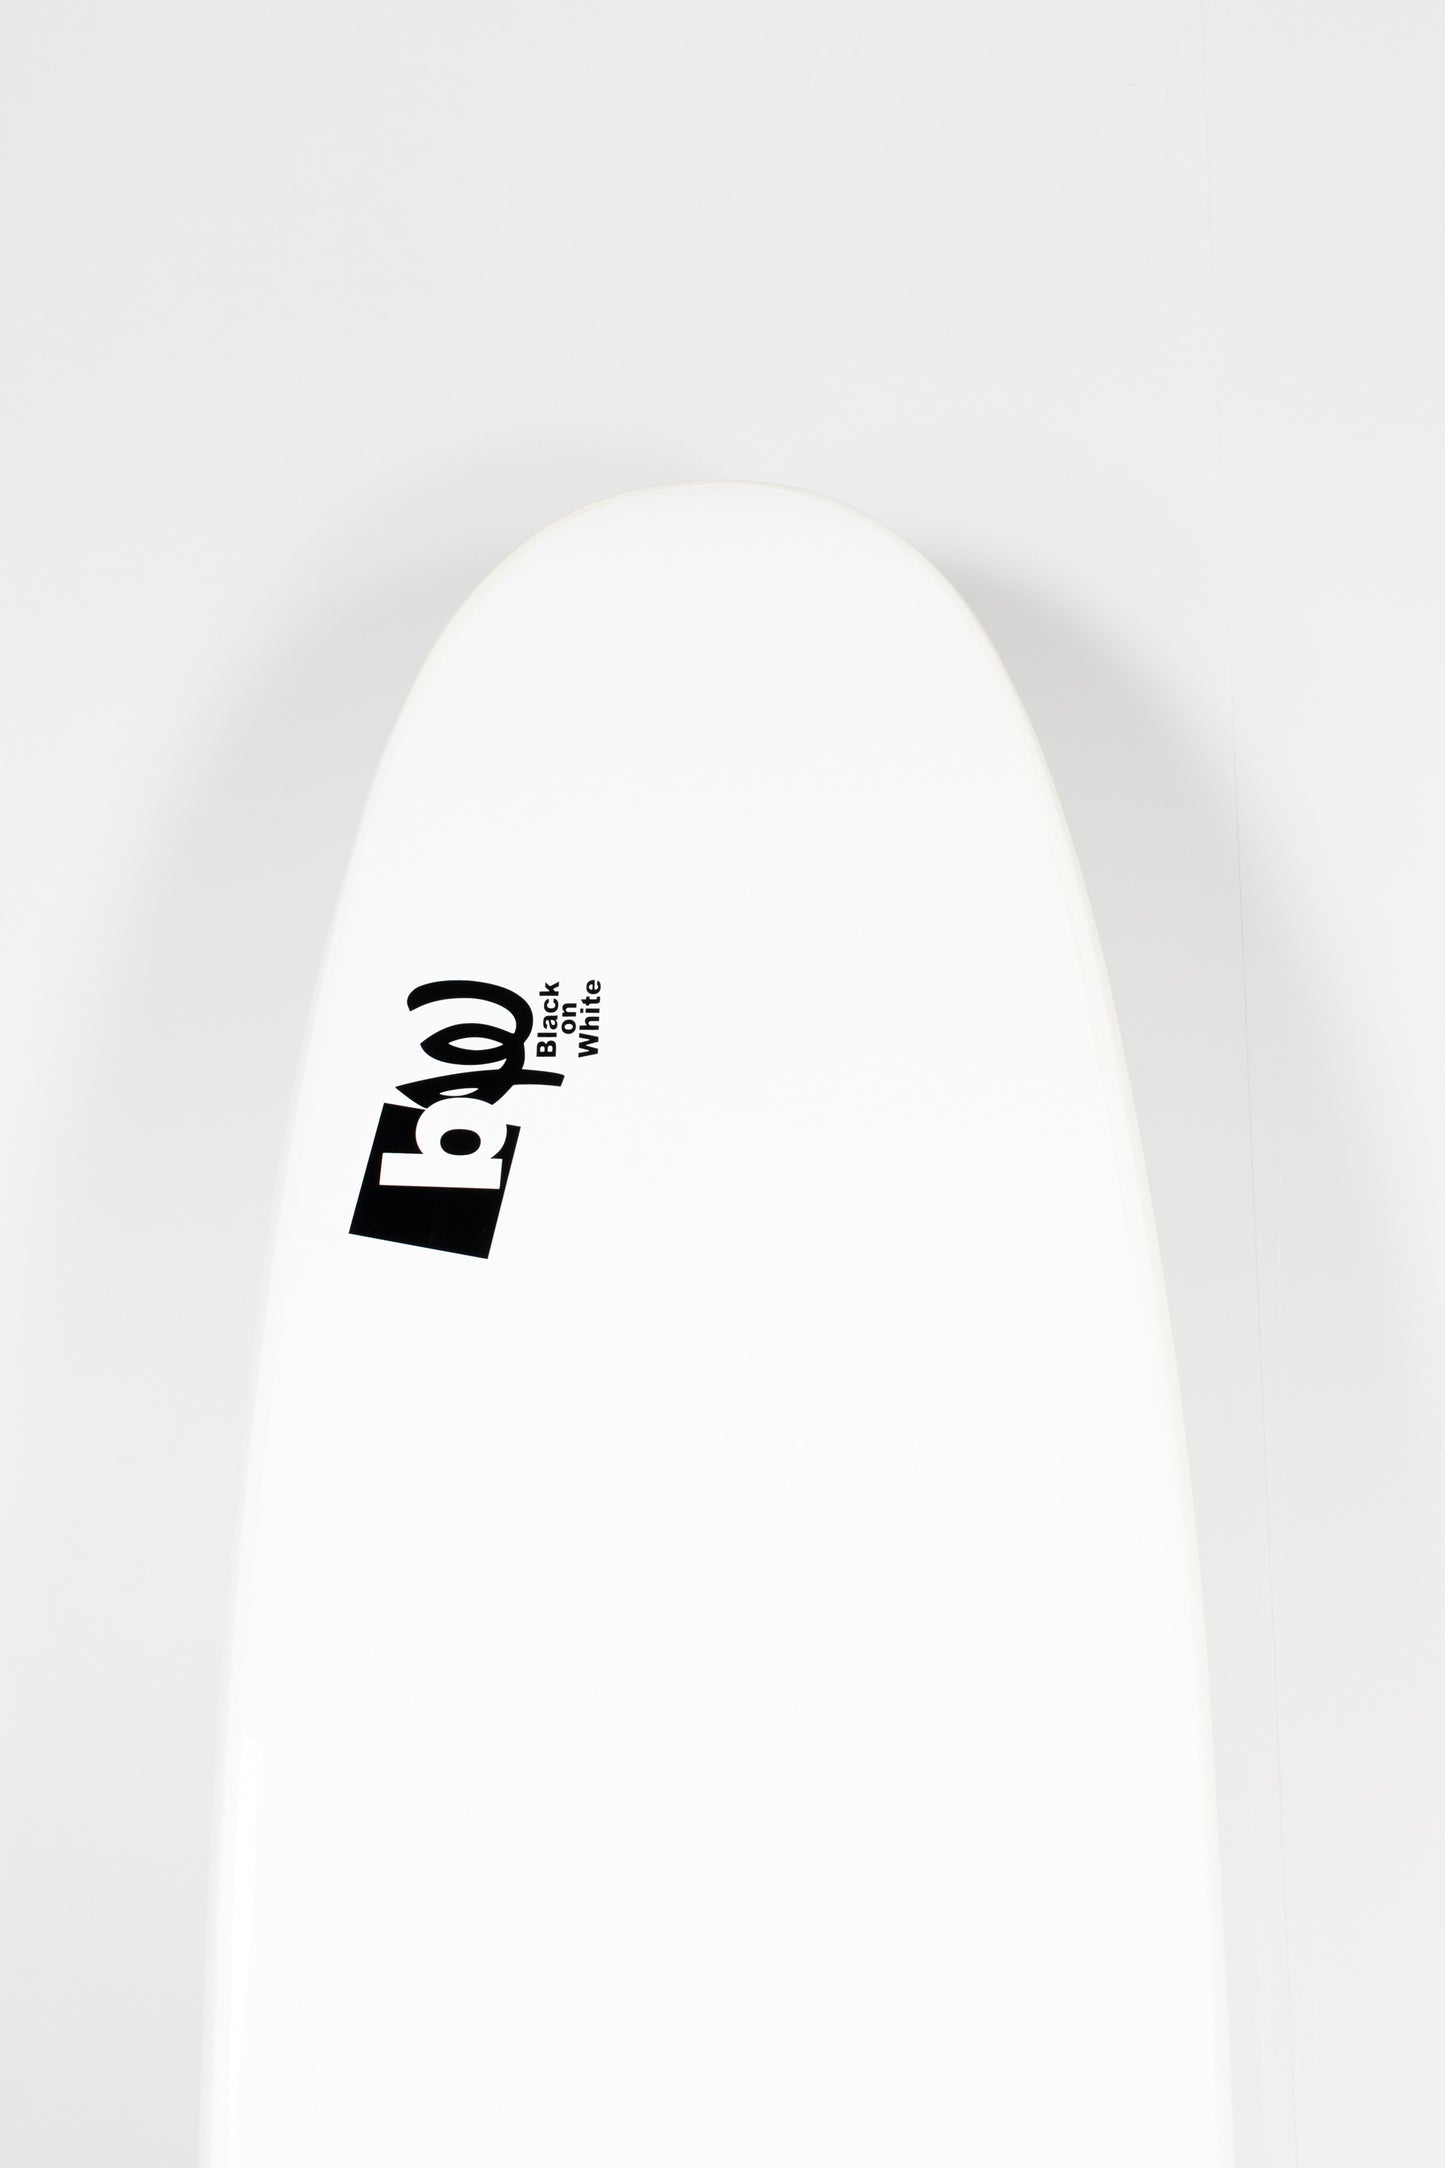 
                  
                    Pukas Surf Shop - Black On White SOFTBOARDS - BW SOFTBOARDS 8.0
                  
                